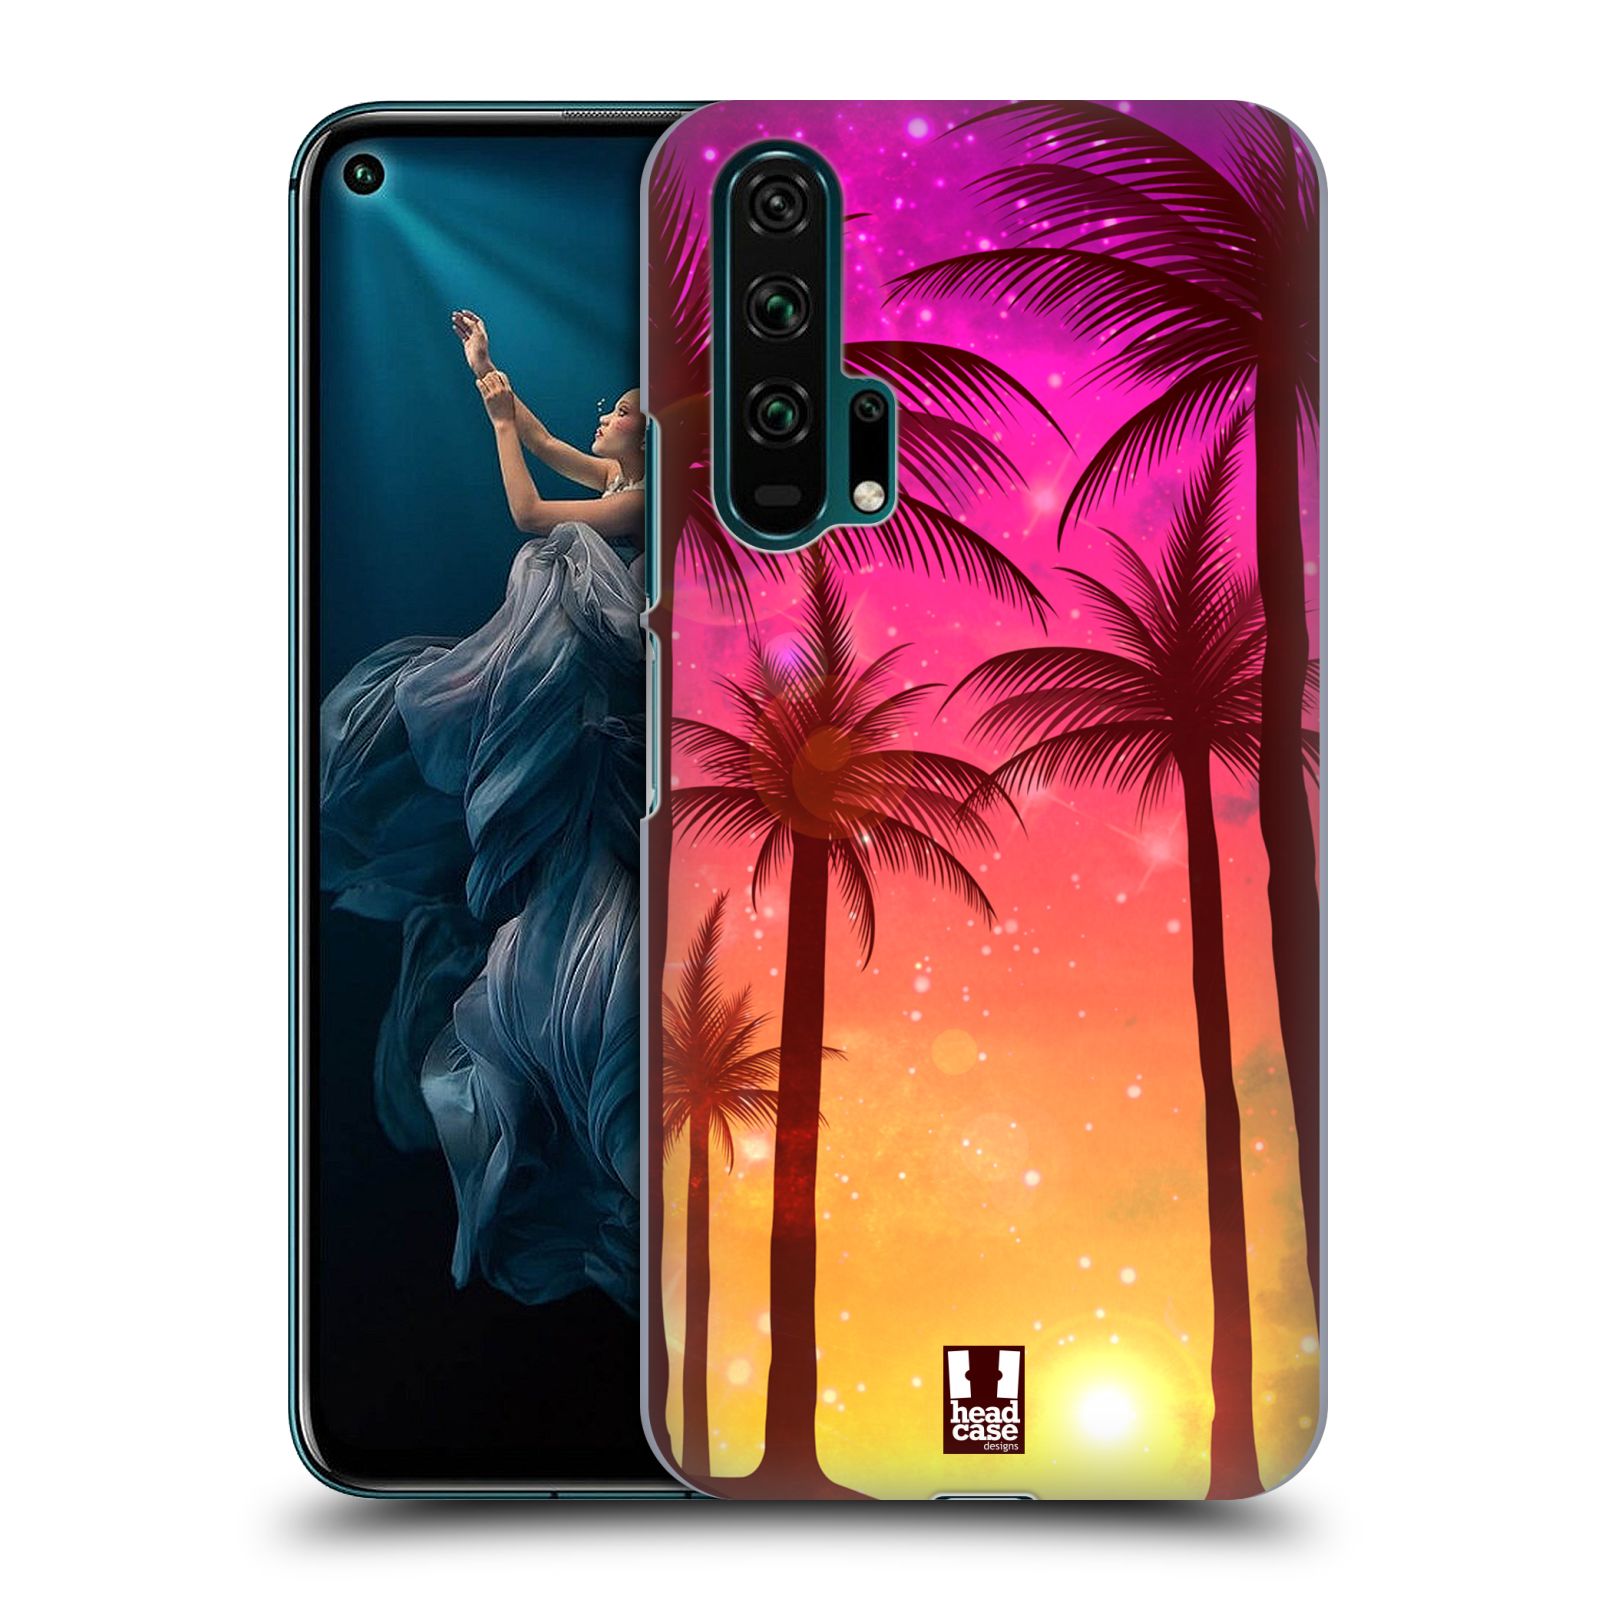 Pouzdro na mobil Honor 20 PRO - HEAD CASE - vzor Kreslený motiv silueta moře a palmy RŮŽOVÁ